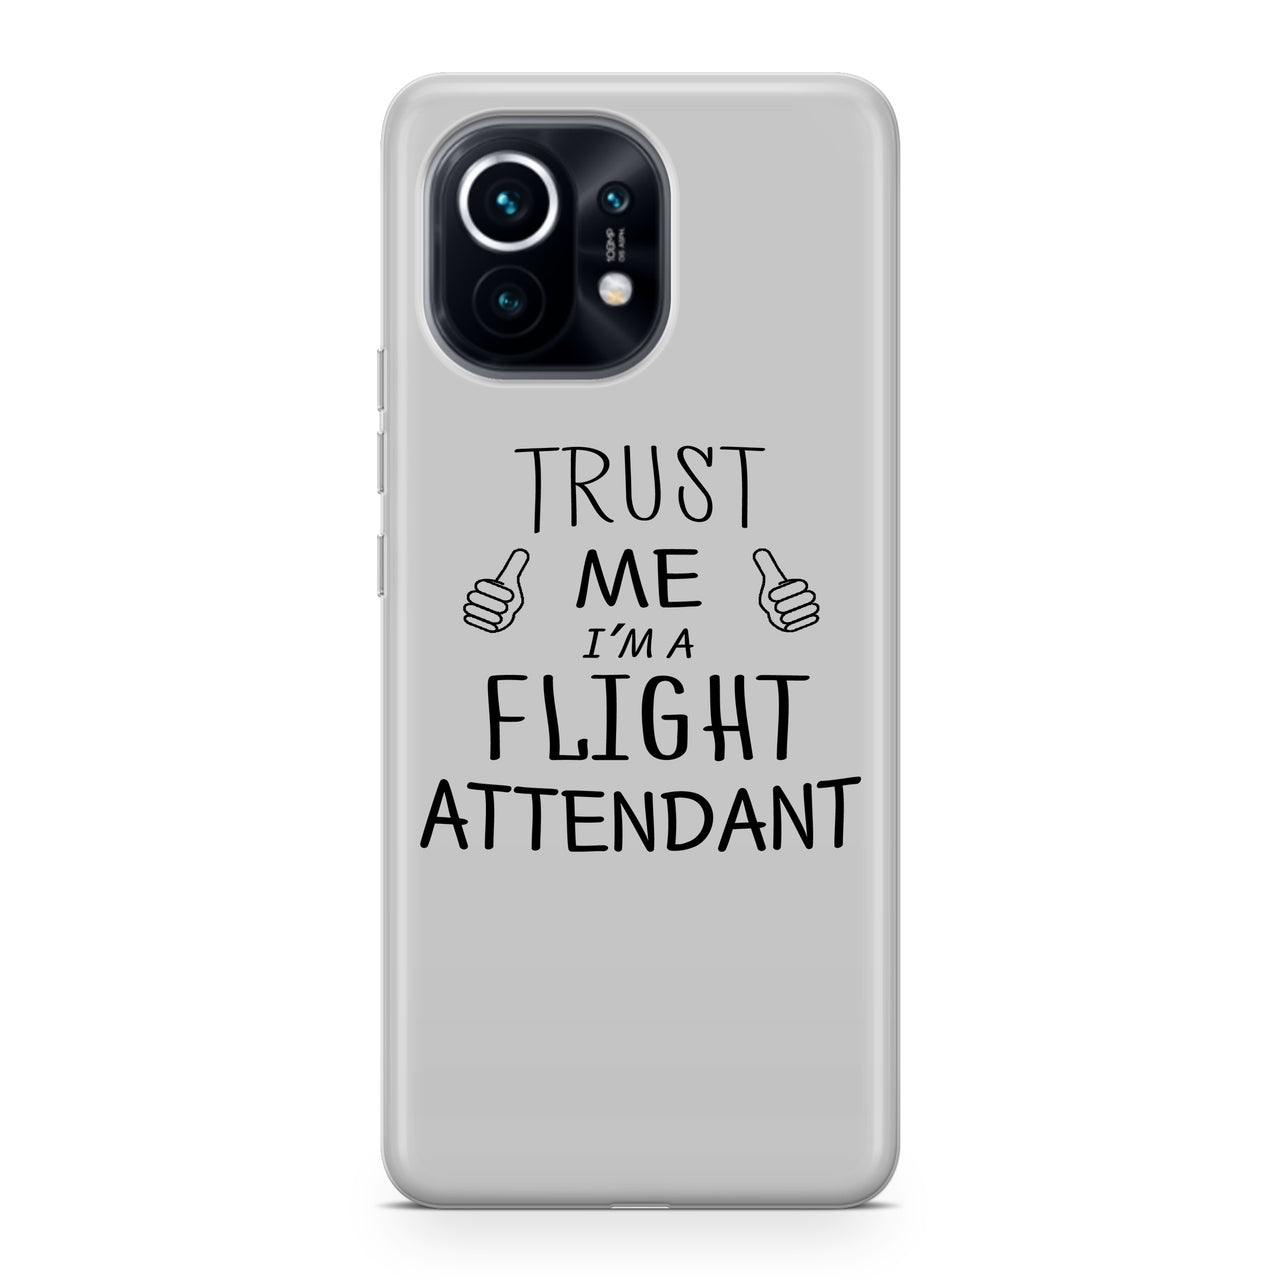 Trust Me I'm a Flight Attendant Designed Xiaomi Cases